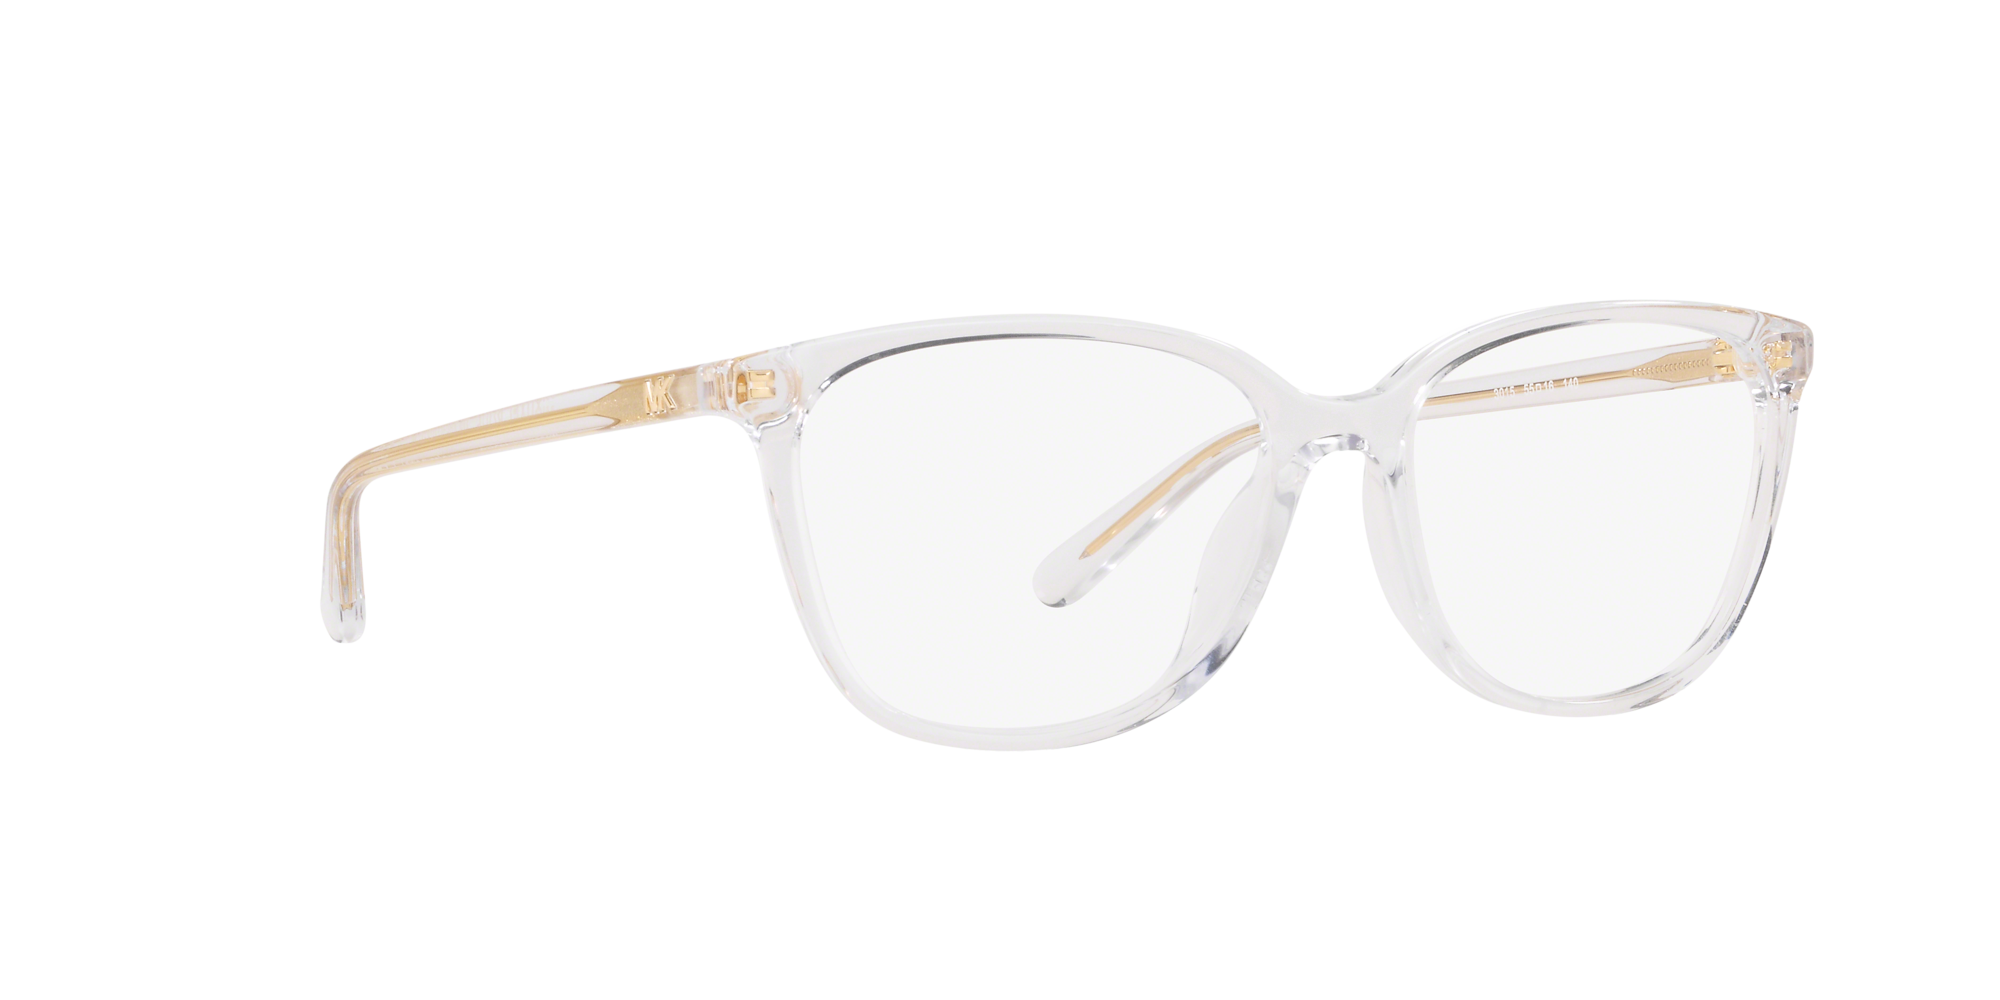 Angle_Right01 Michael Kors Santa Clara MK 4067U Glasses Transparent / Transparent, Clear